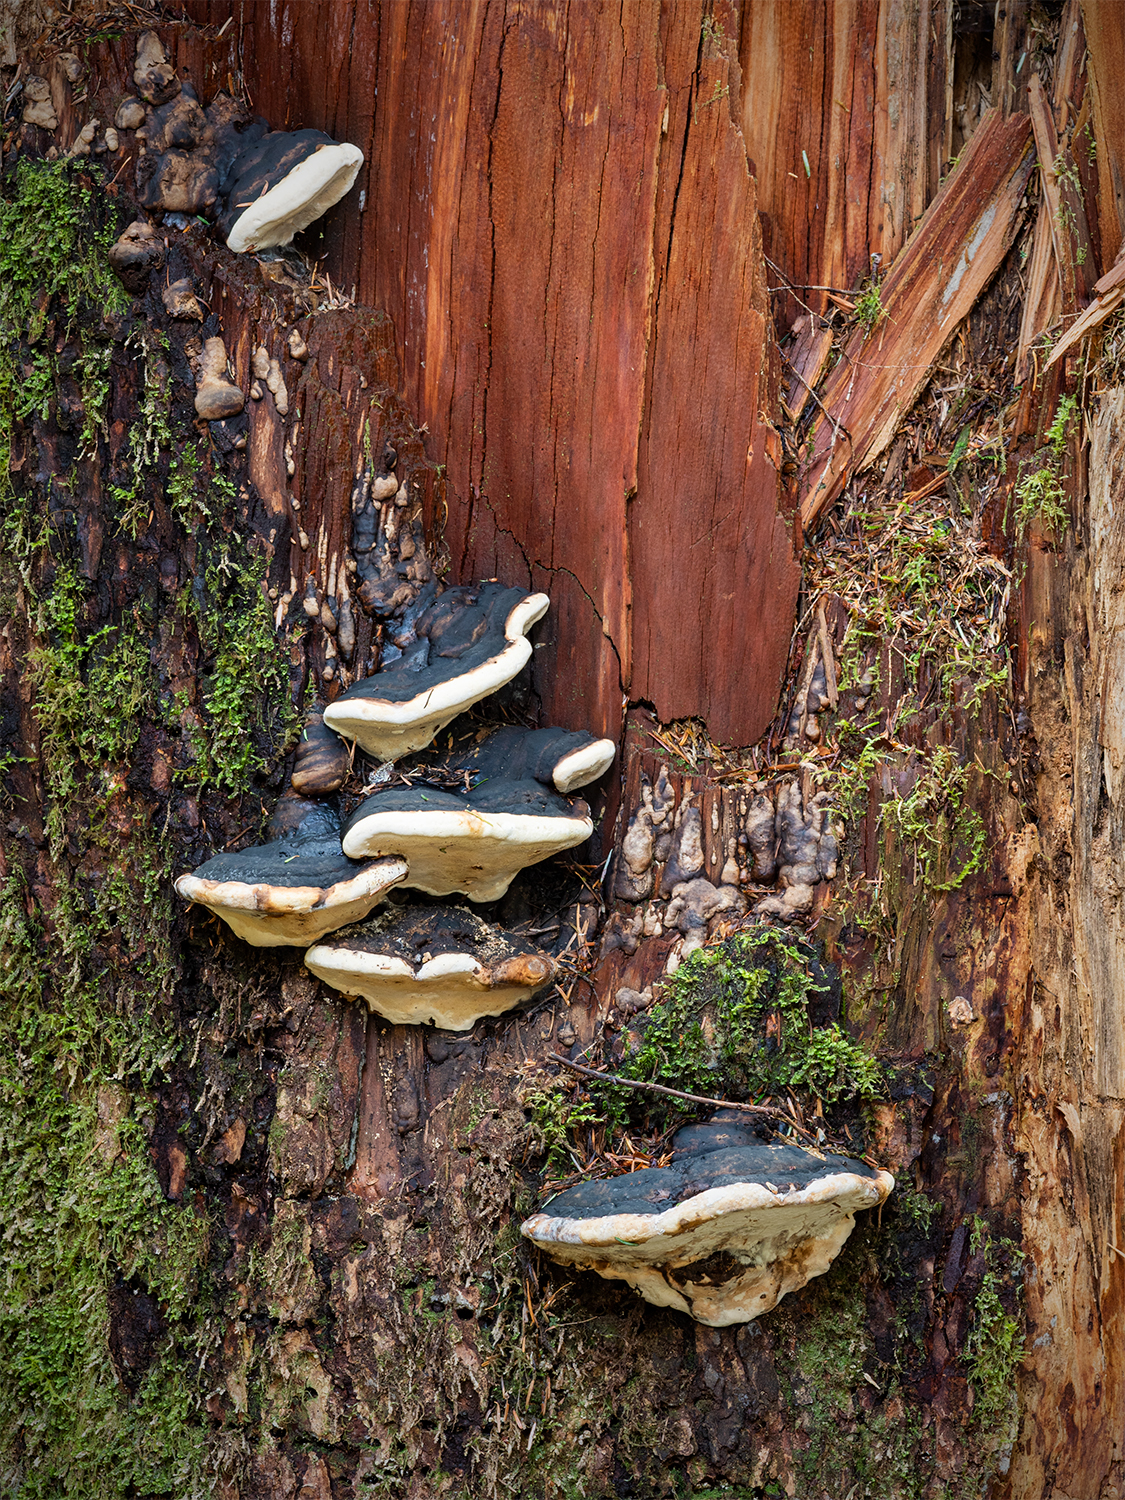 Fungi grows on a Douglas fir (Pseudotsuga menziesii) in Olympic National Park in Washington